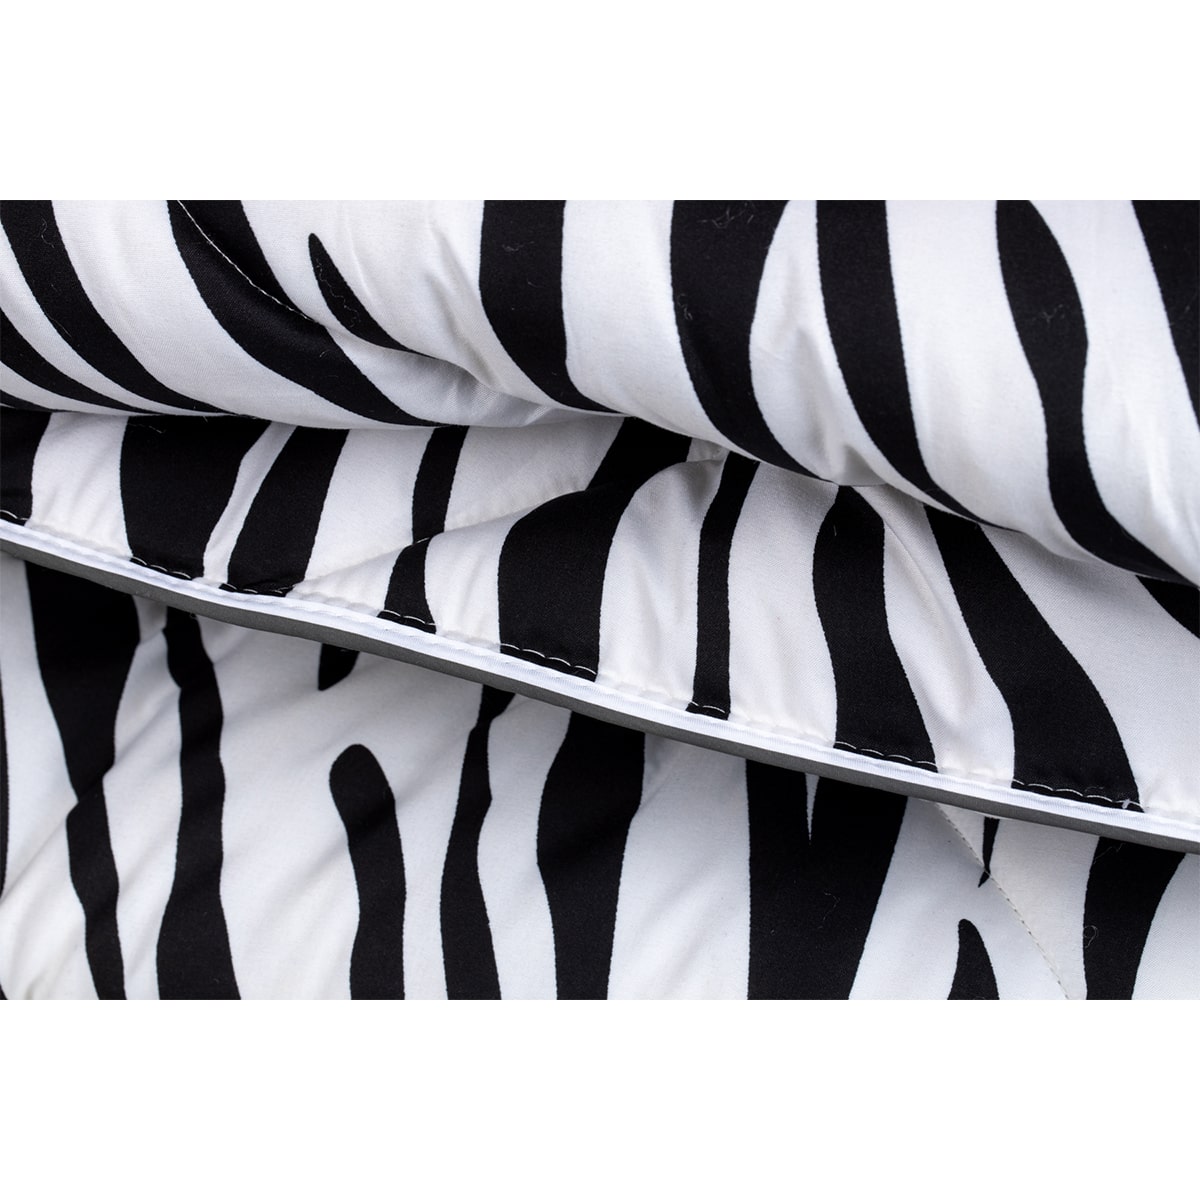       Zelesta Wonderbed Zebra Skin Wasmachine Bestendig Dekbed Krimpt Niet